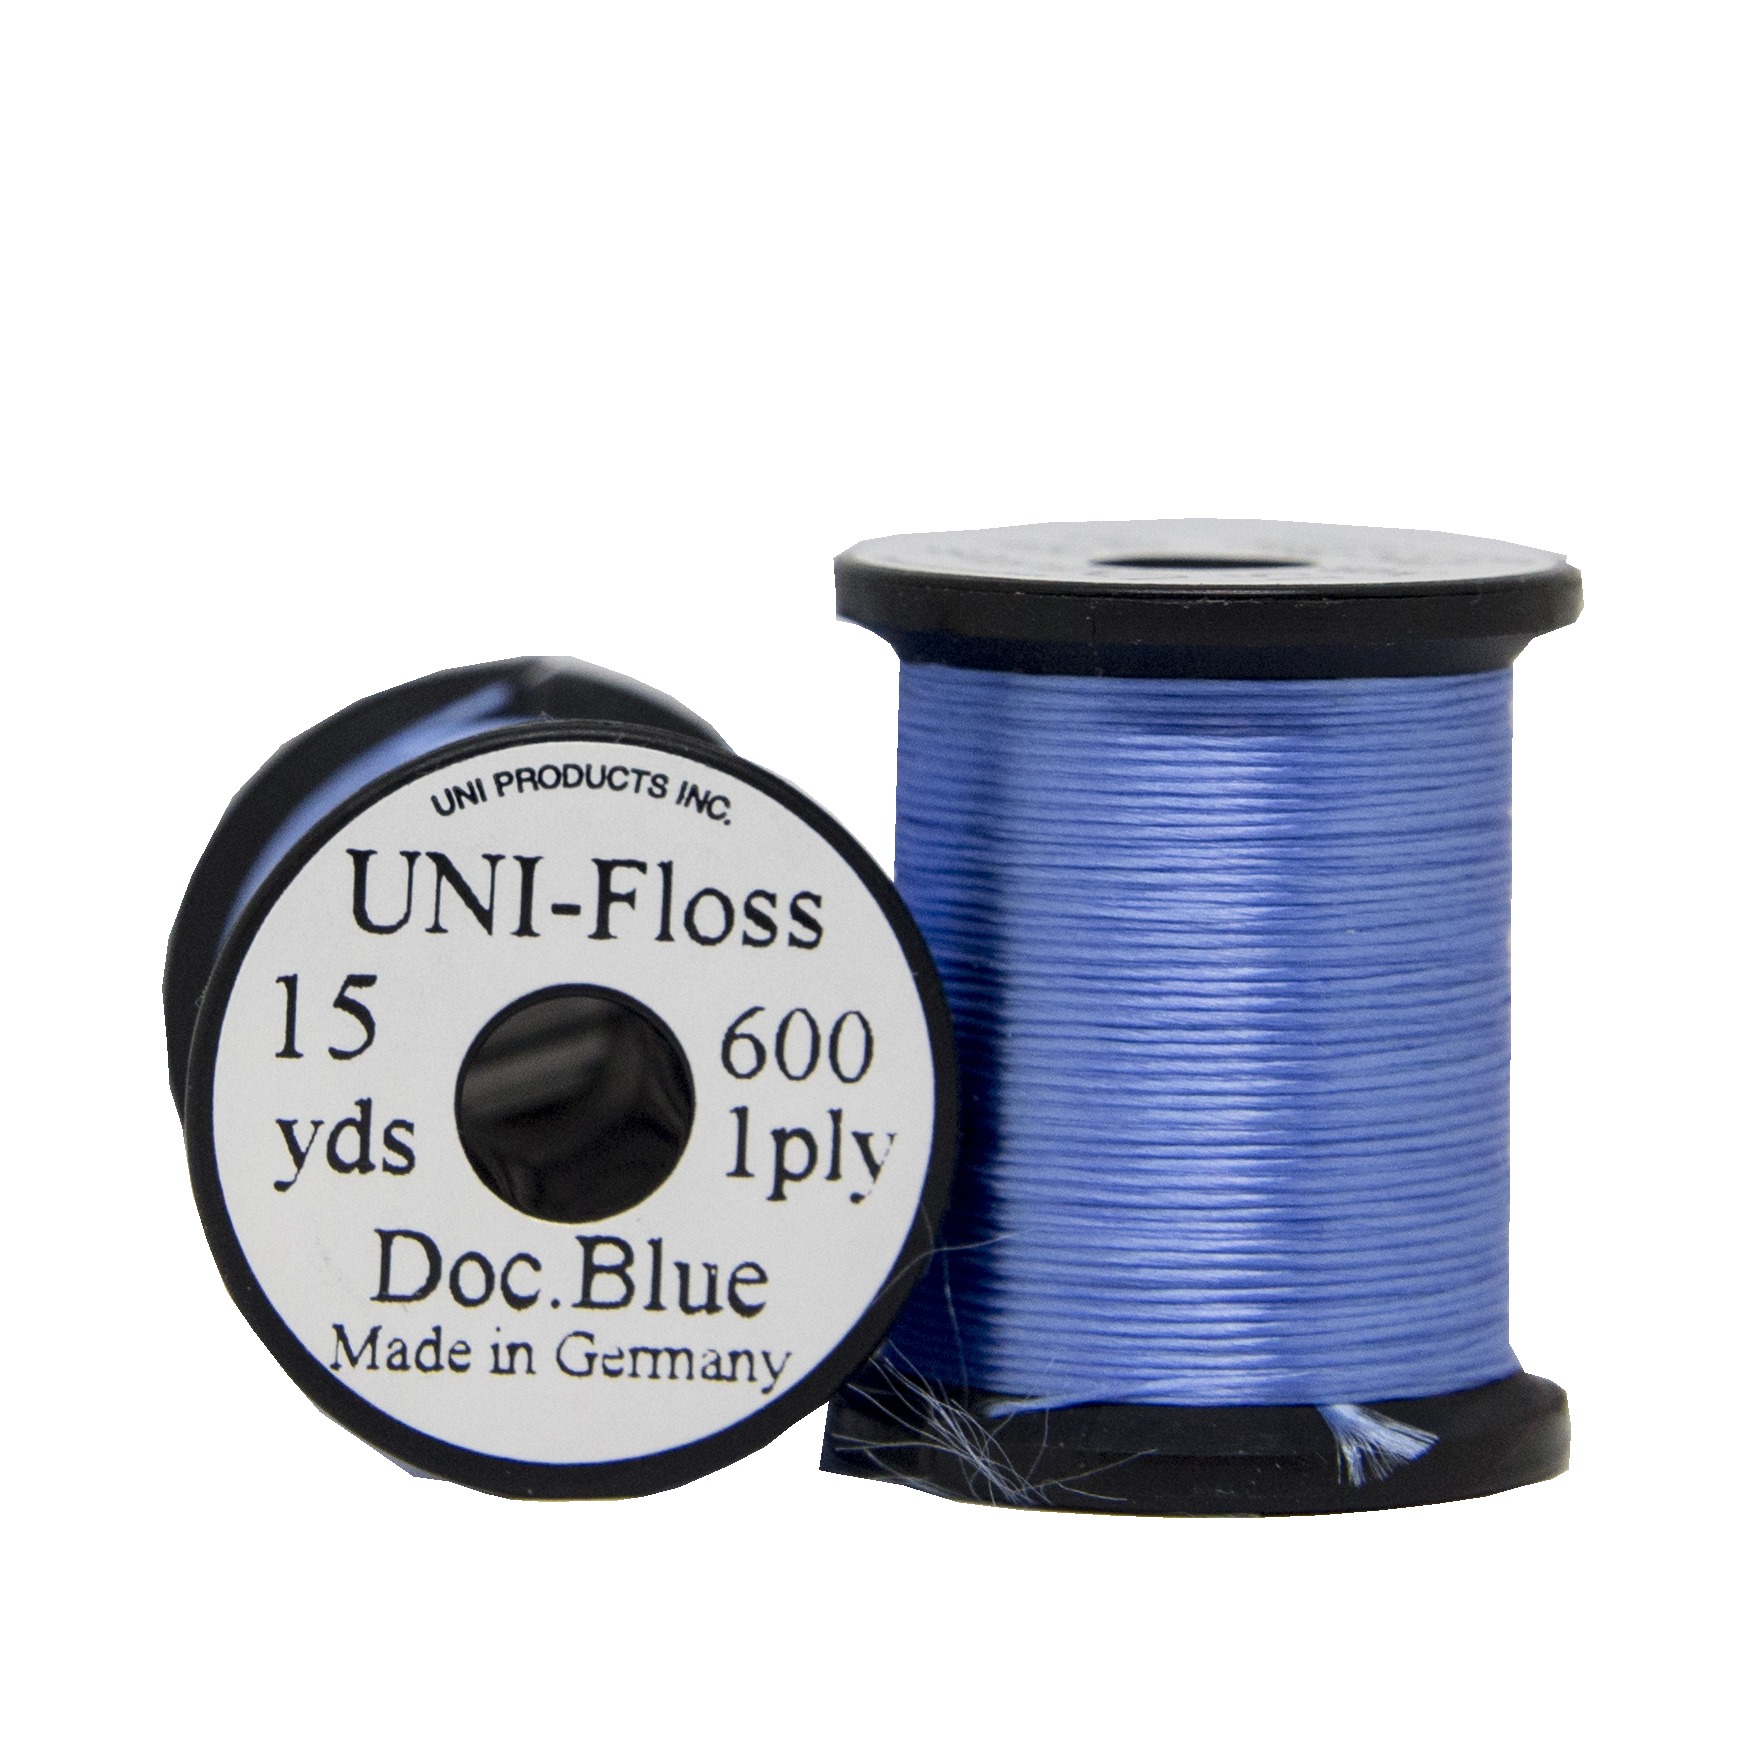 UNI Floss 15yds - Doc. Blue